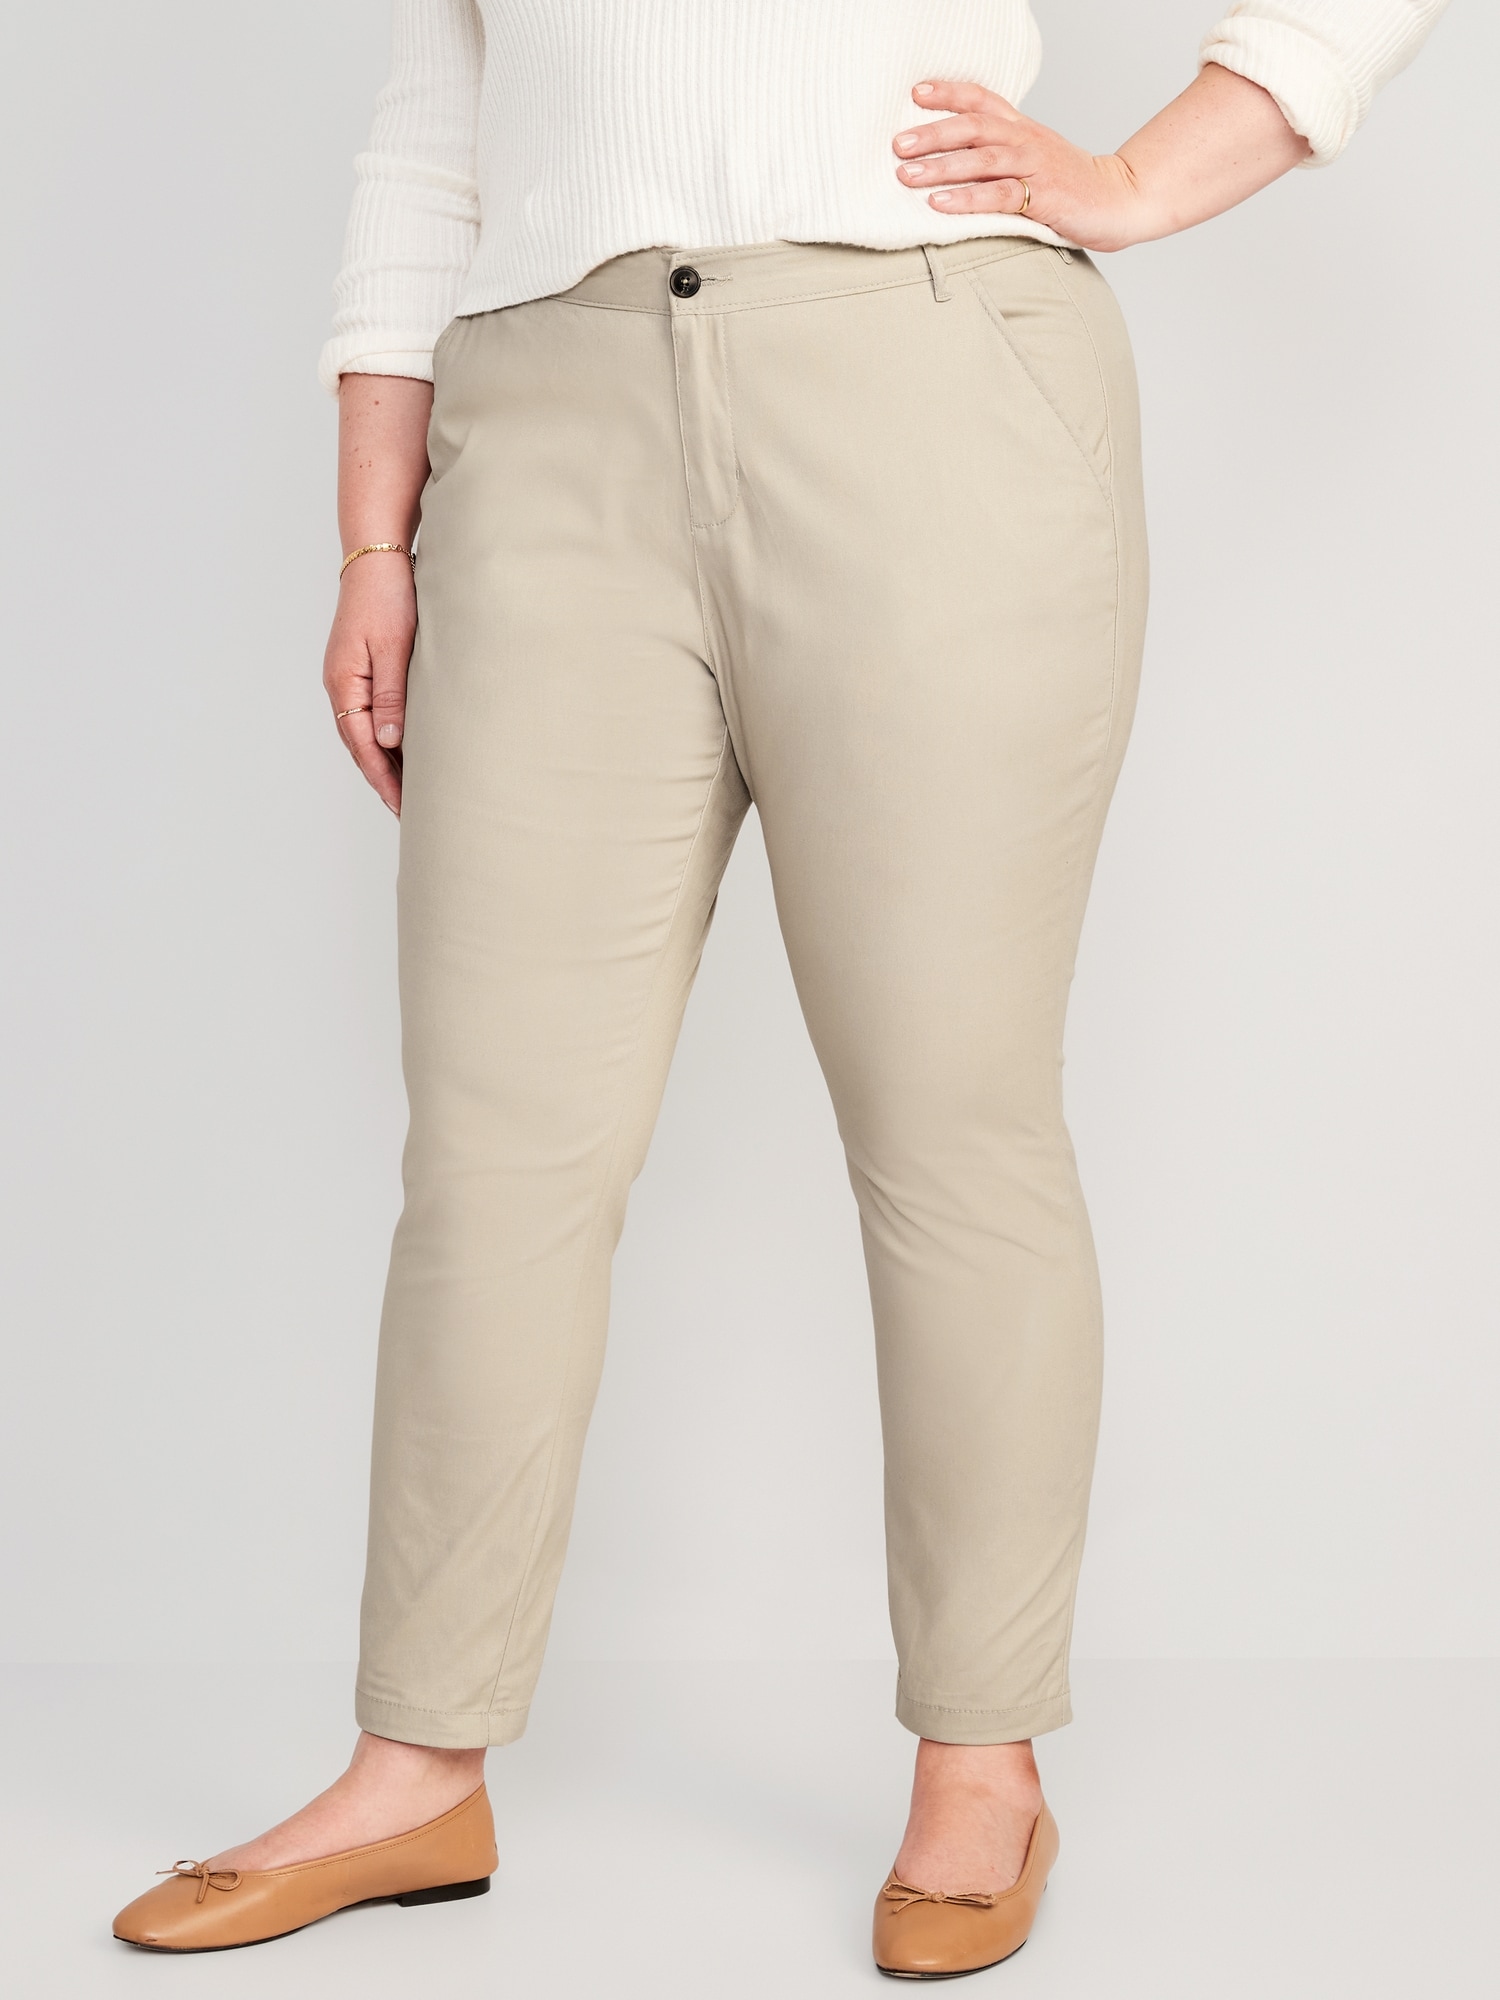 nsendm Pant Trousers Trousers Women's With Pockets Long Drawstring Summer  Bottoms Pants Dress Pants for Women Petite Pants Khaki X-Large - Walmart.com